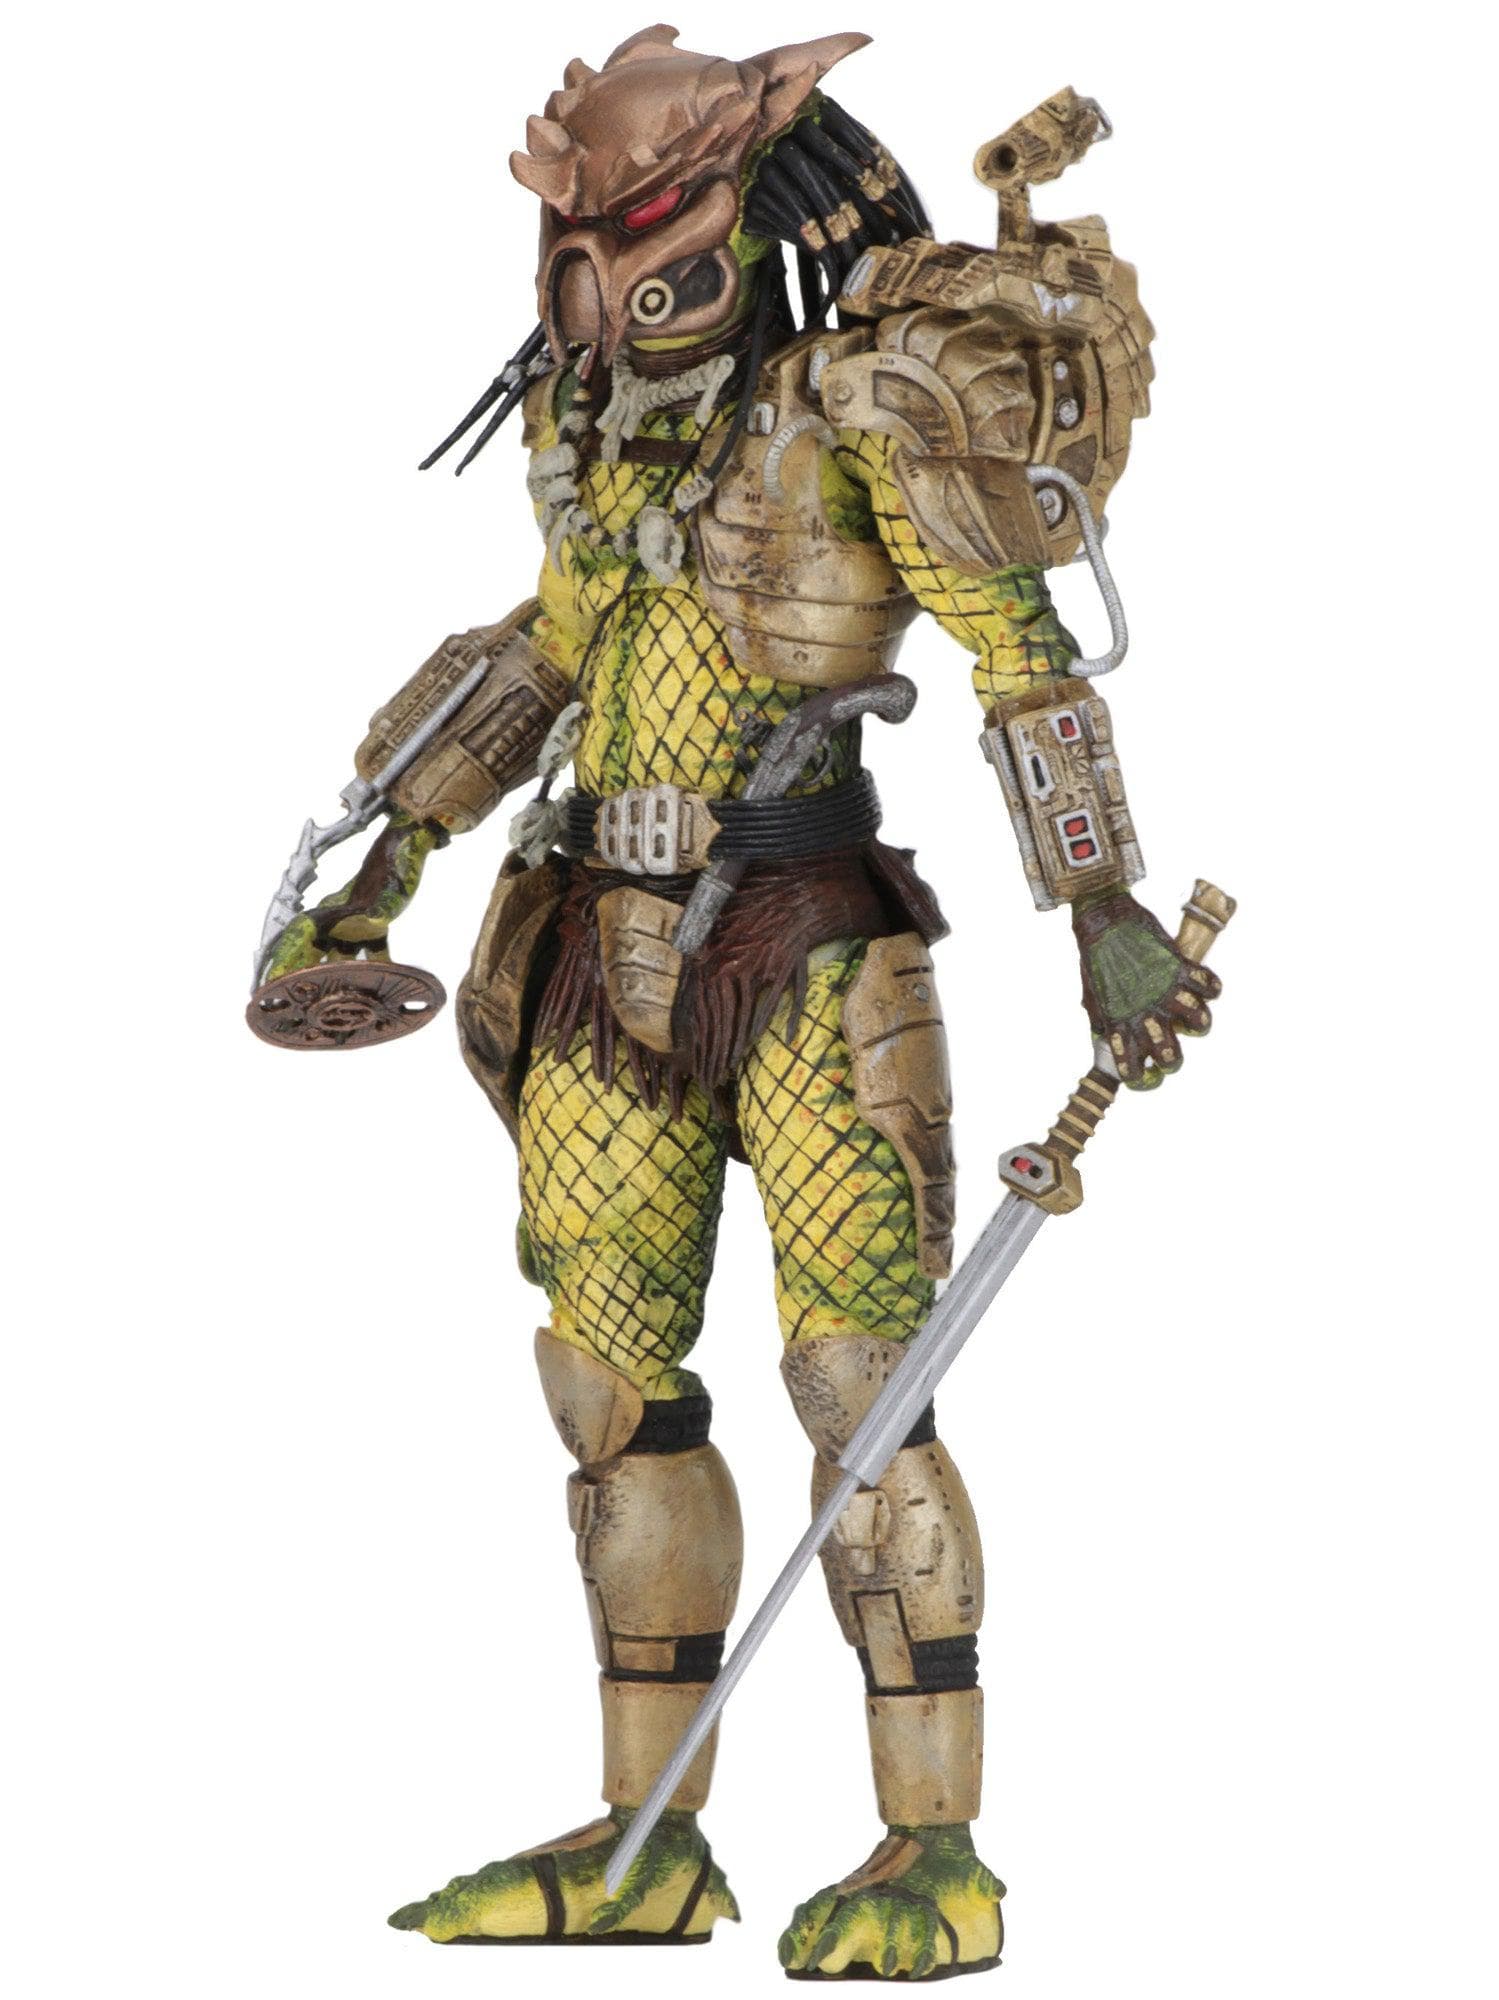 NECA - Predator 2 - 7" Scale Action Figure - Ultimate Elder: The Golden Angel - costumes.com